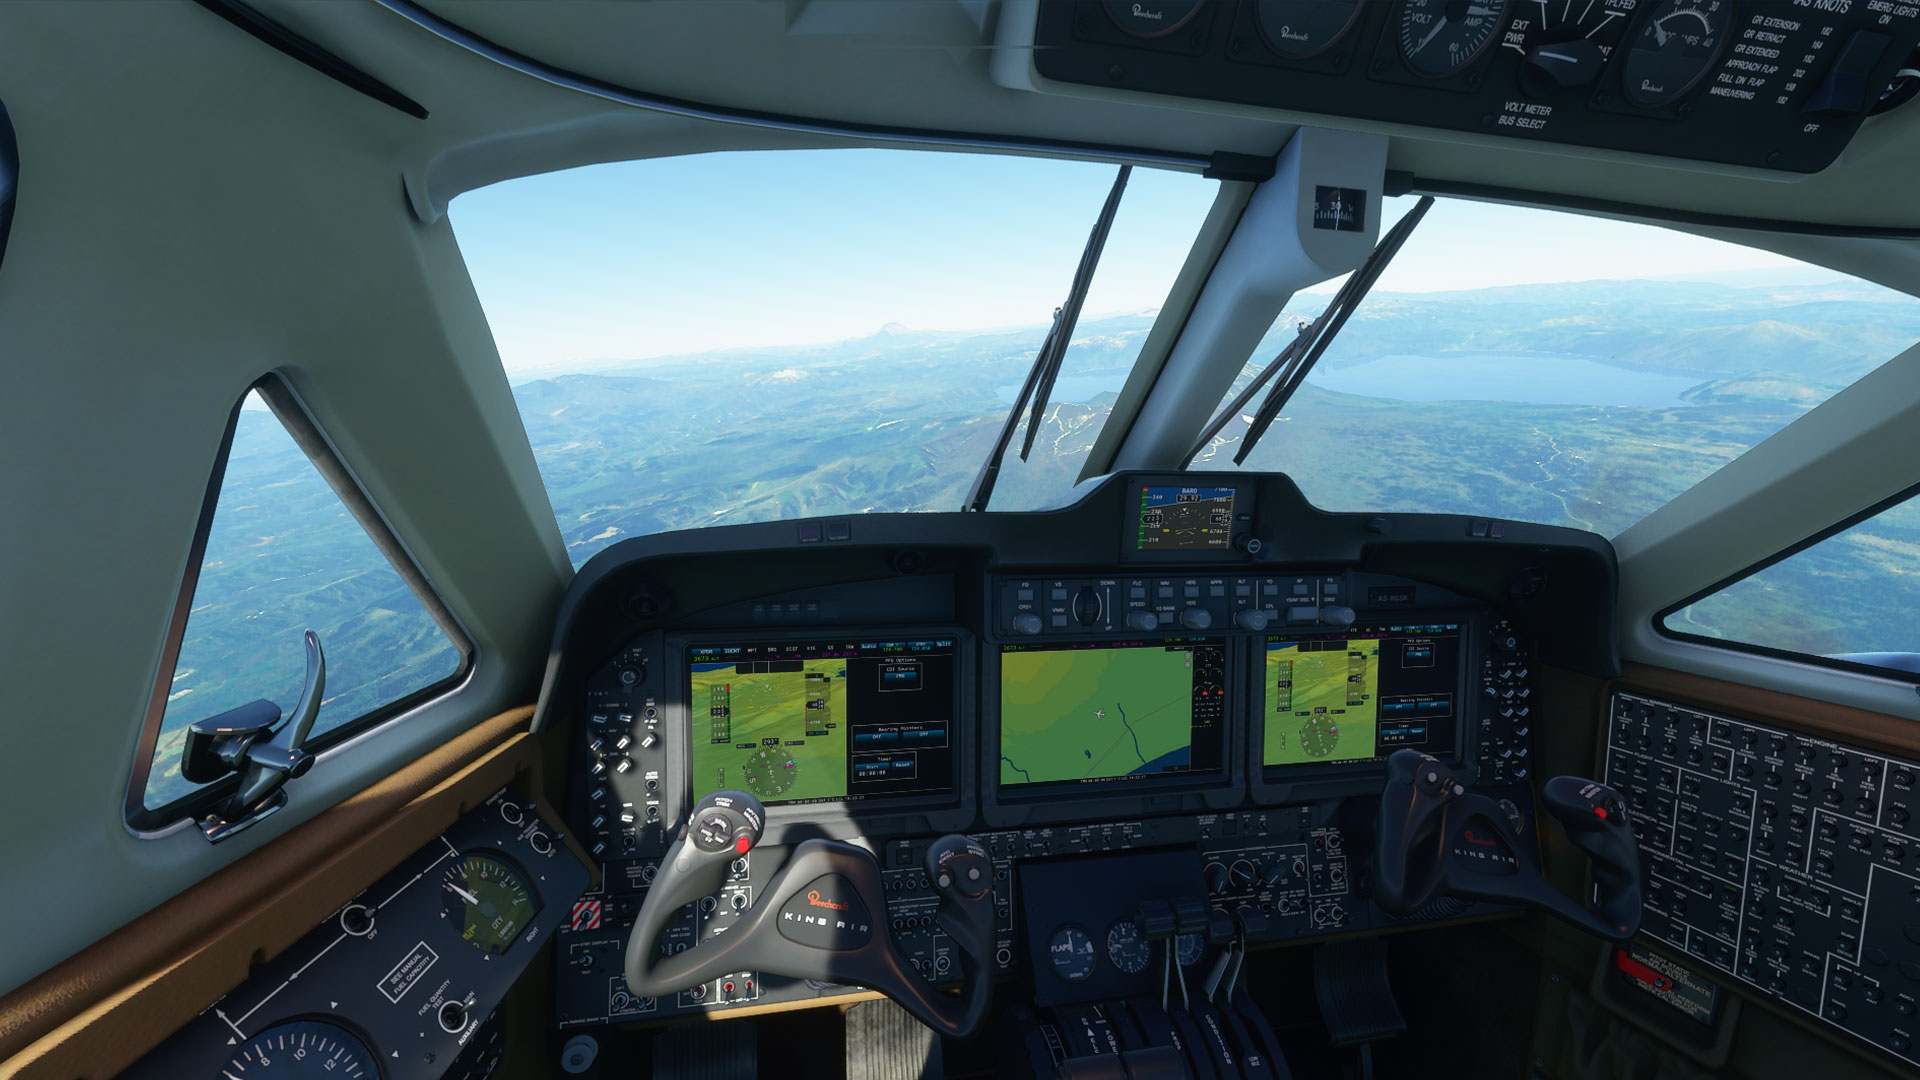 microsoft flight simulator 2020 oculus quest